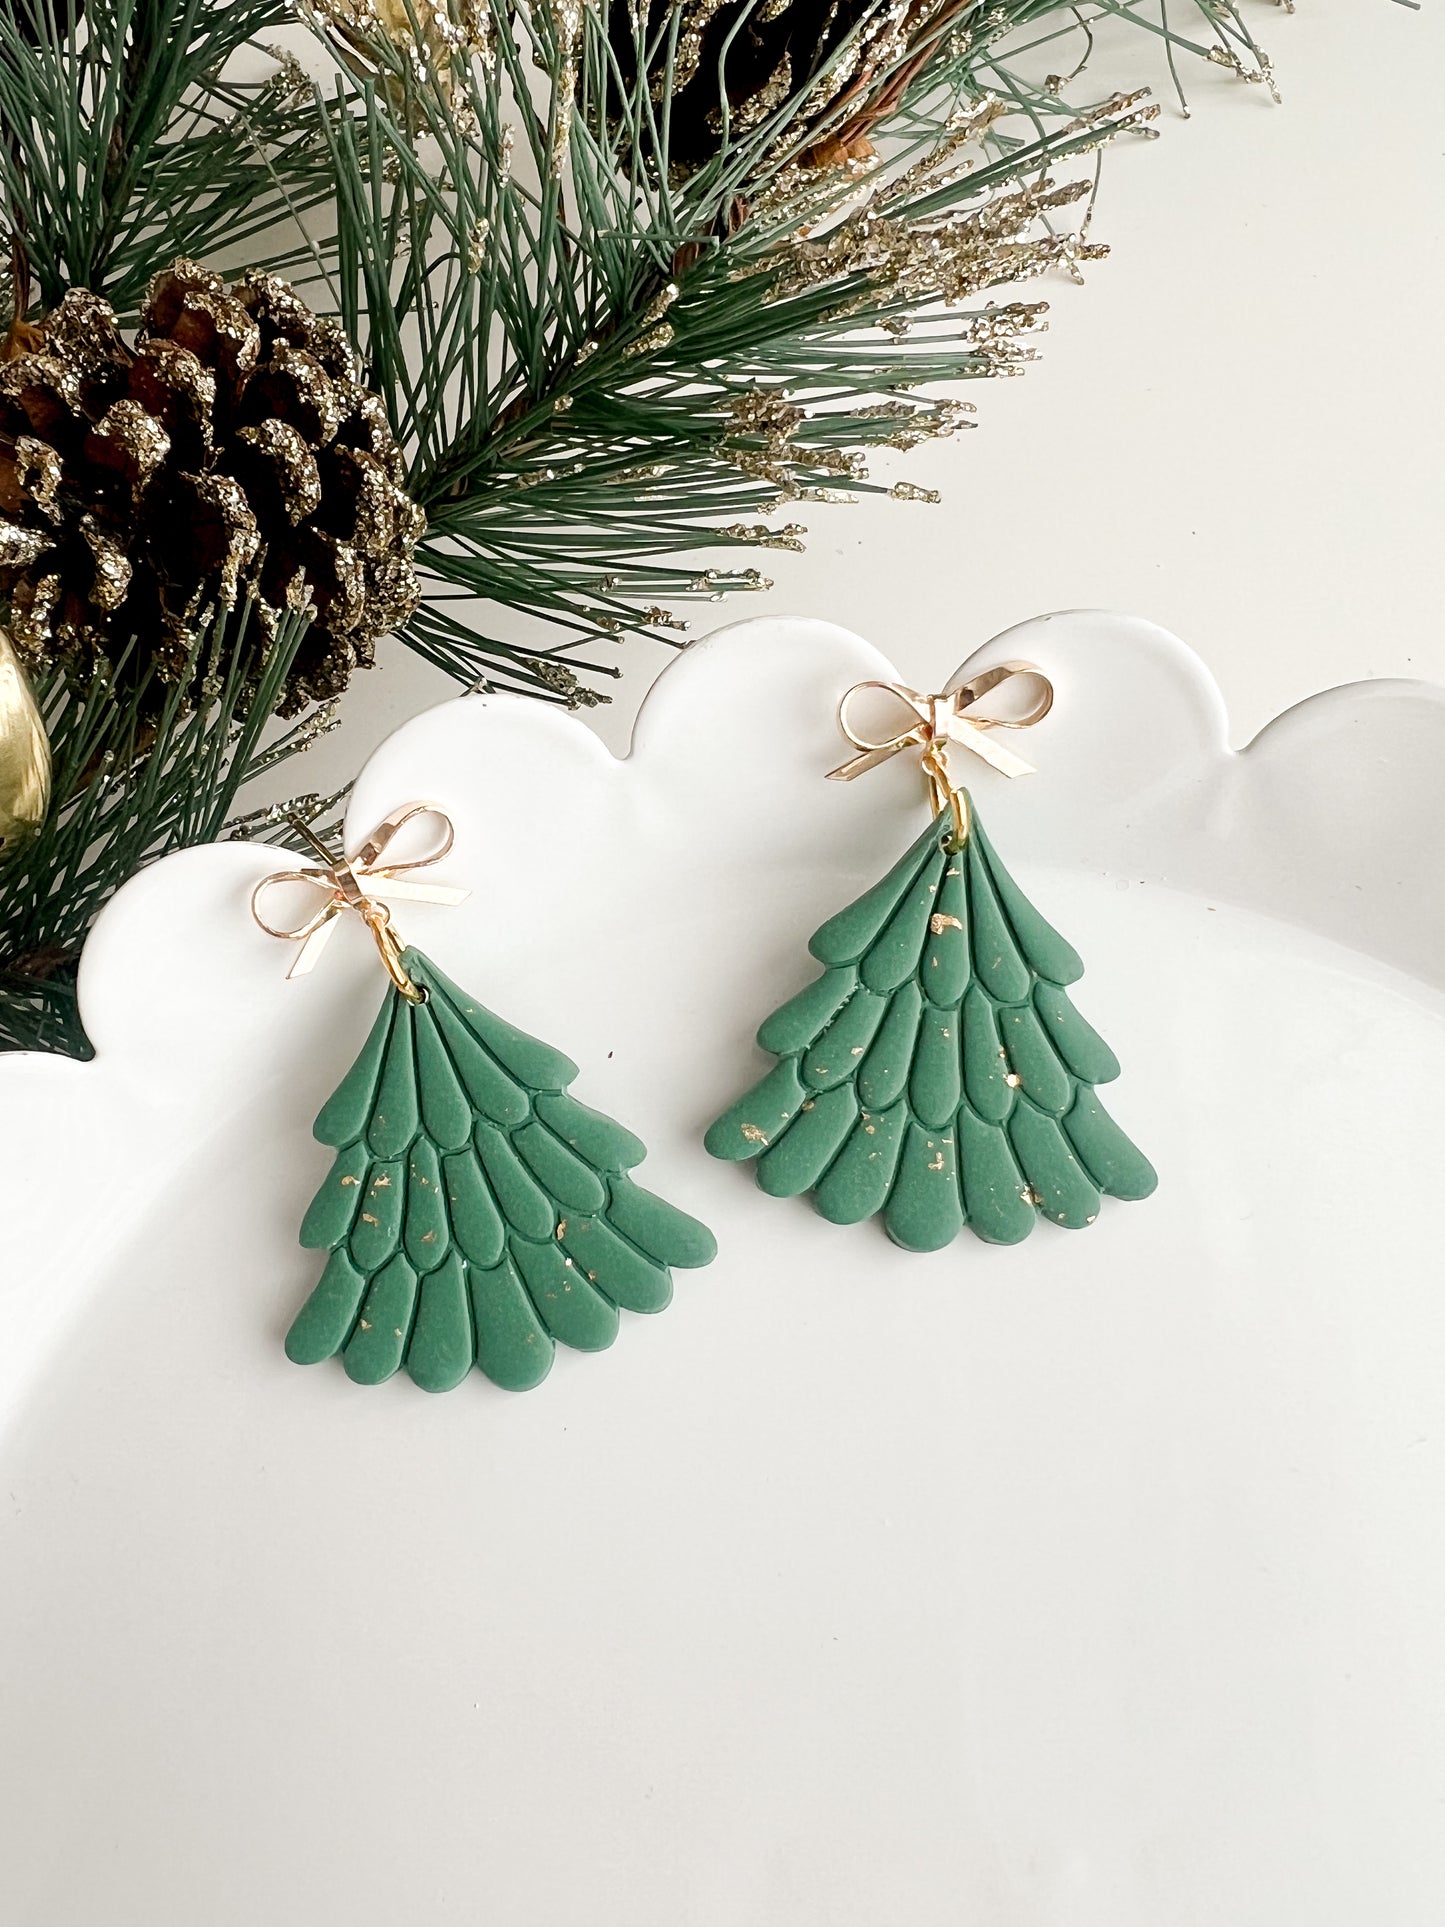 Elegant Christmas Trees in Green